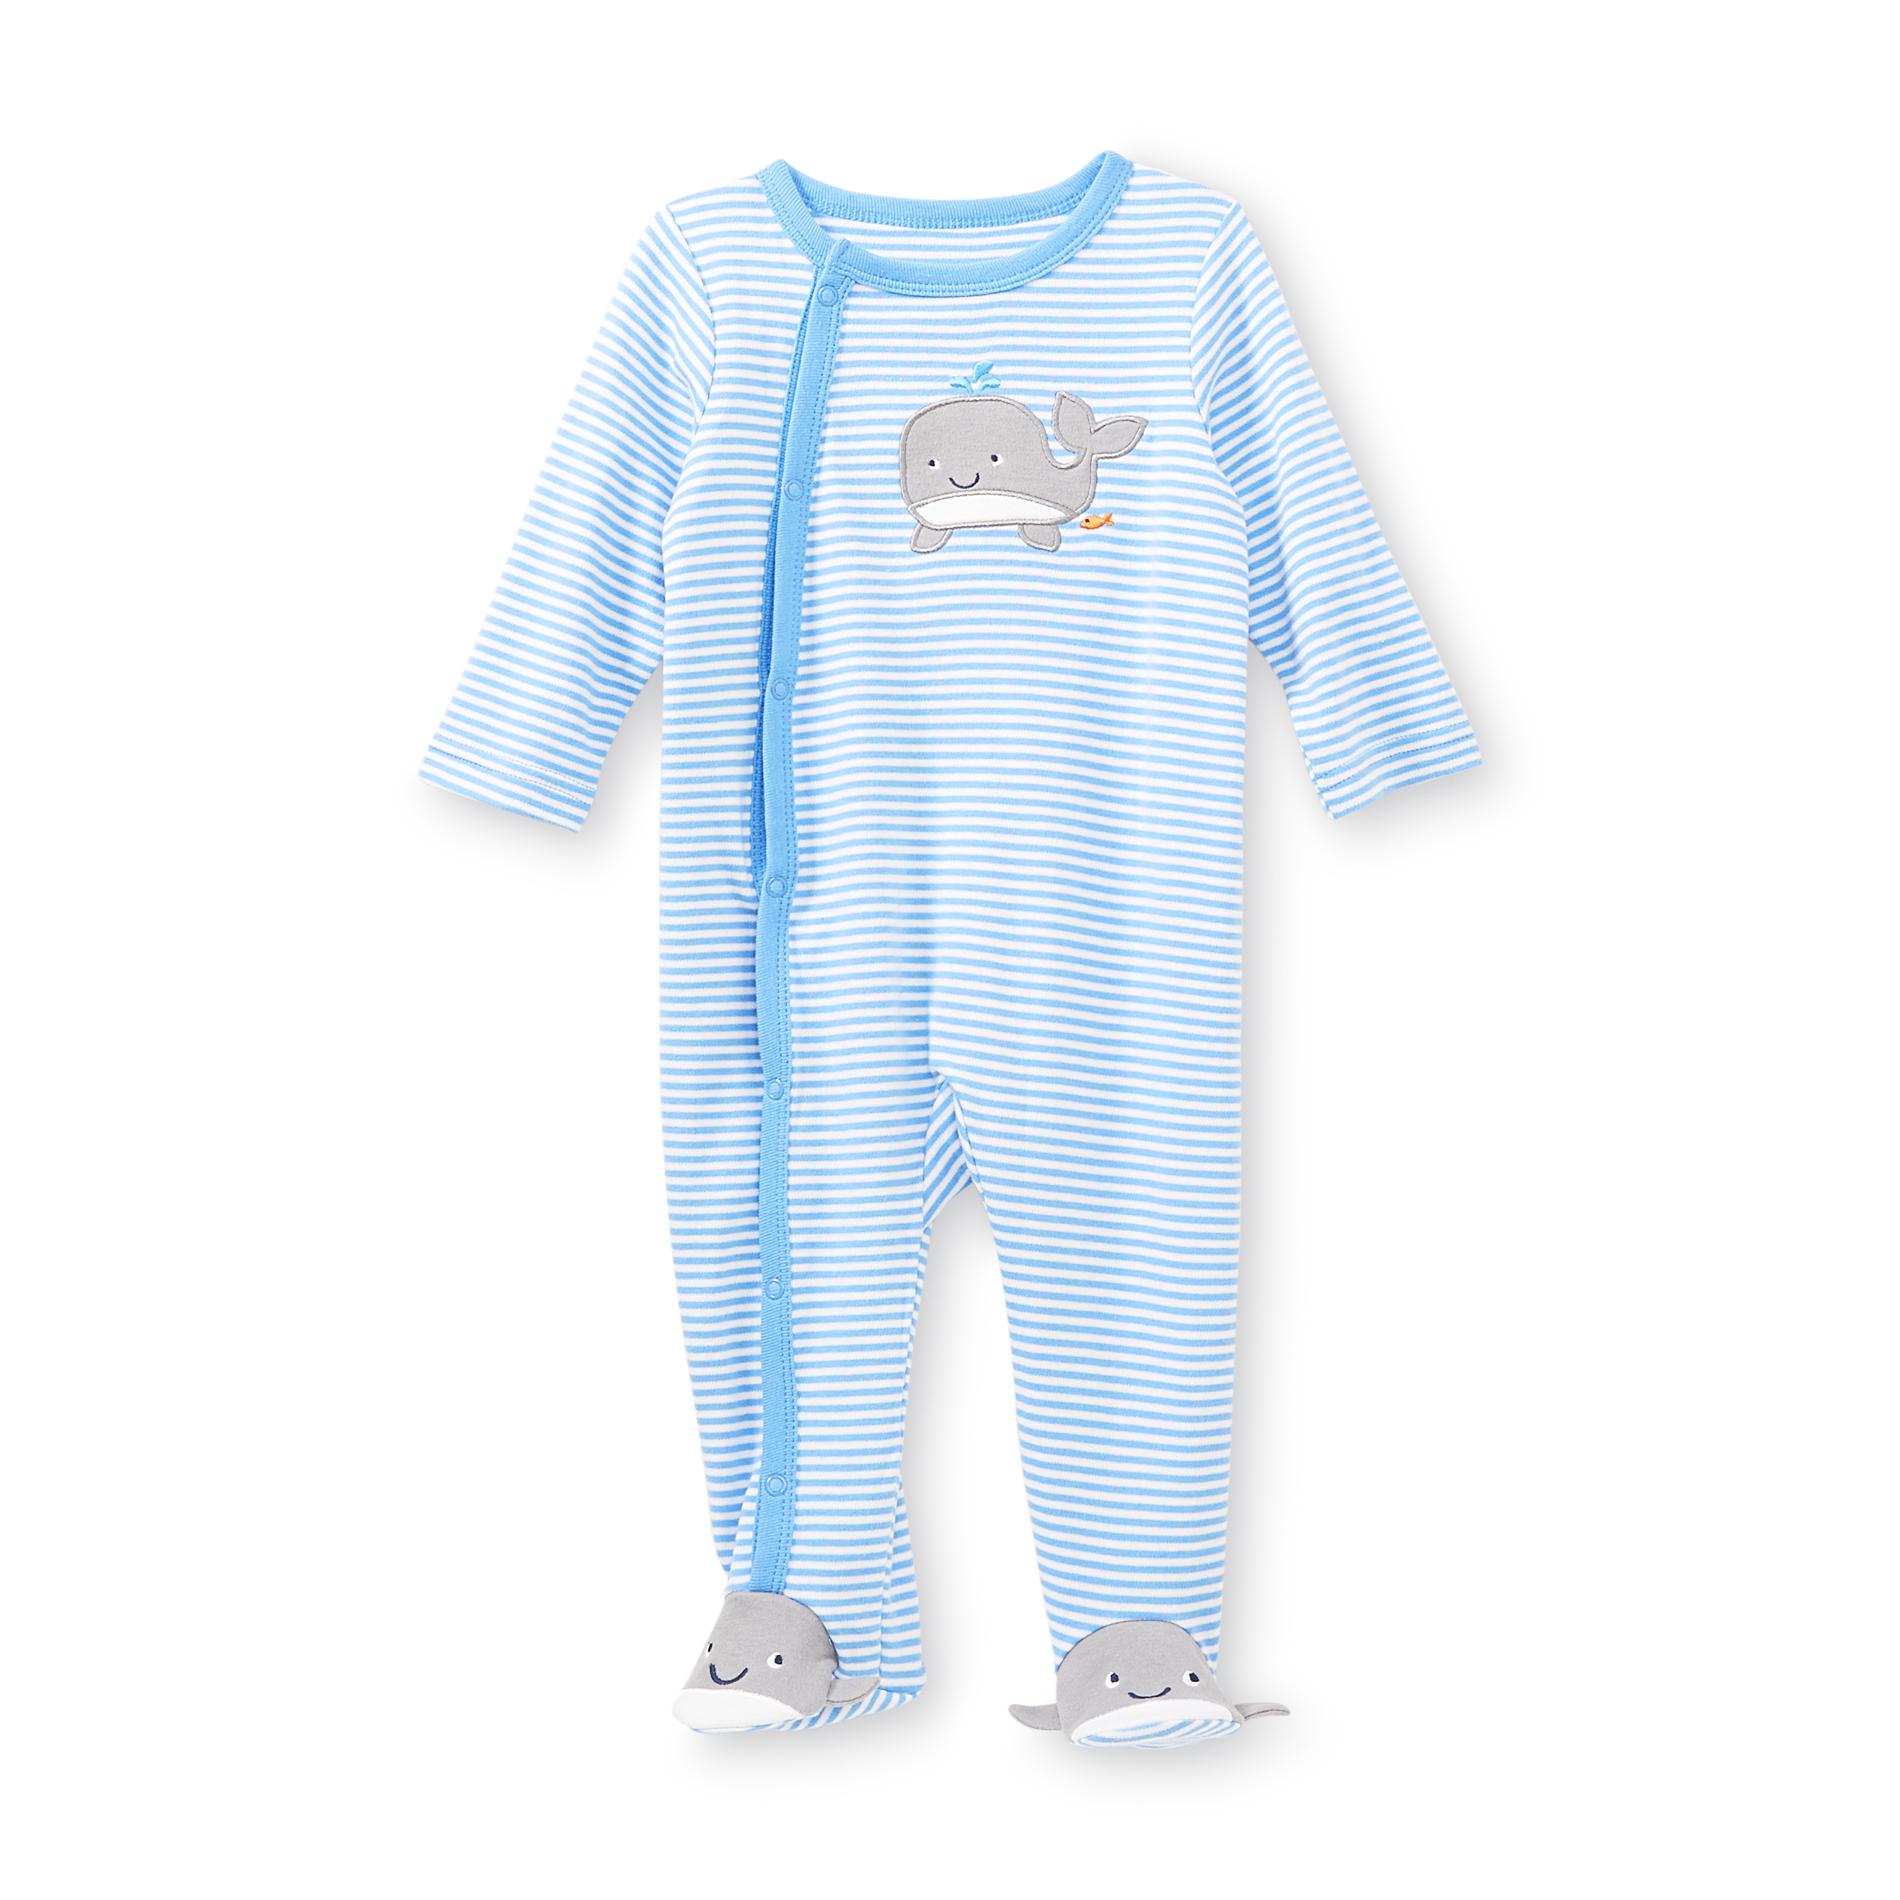 Little Wonders Newborn Boy's Footed Pajamas - Whale